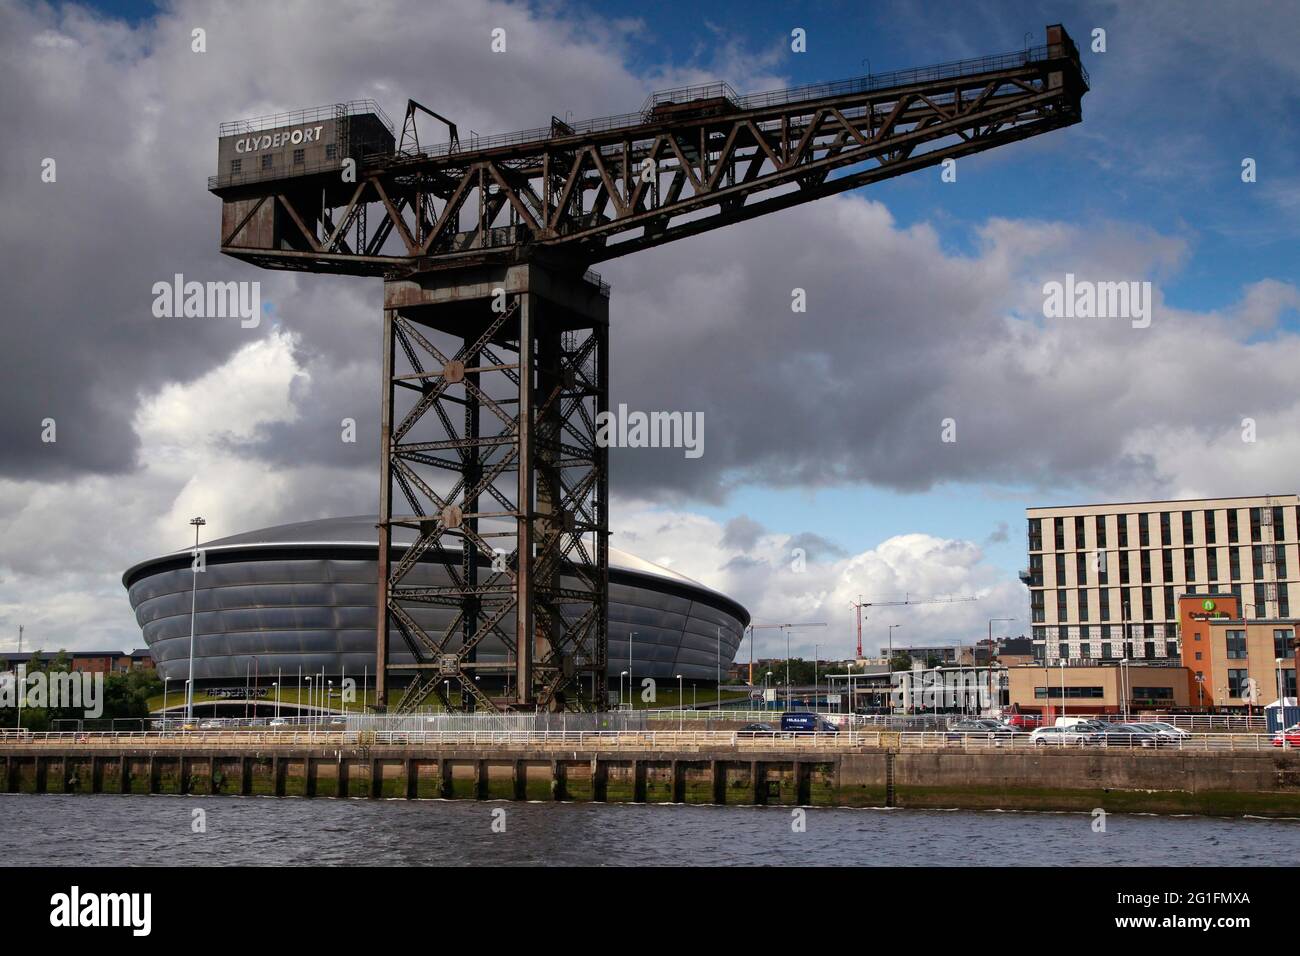 Krahn, port, SSE Hydro, hall polyvalent, aréna, river Clyde, Finnieston, Glasgow, Écosse, Grande-Bretagne Banque D'Images